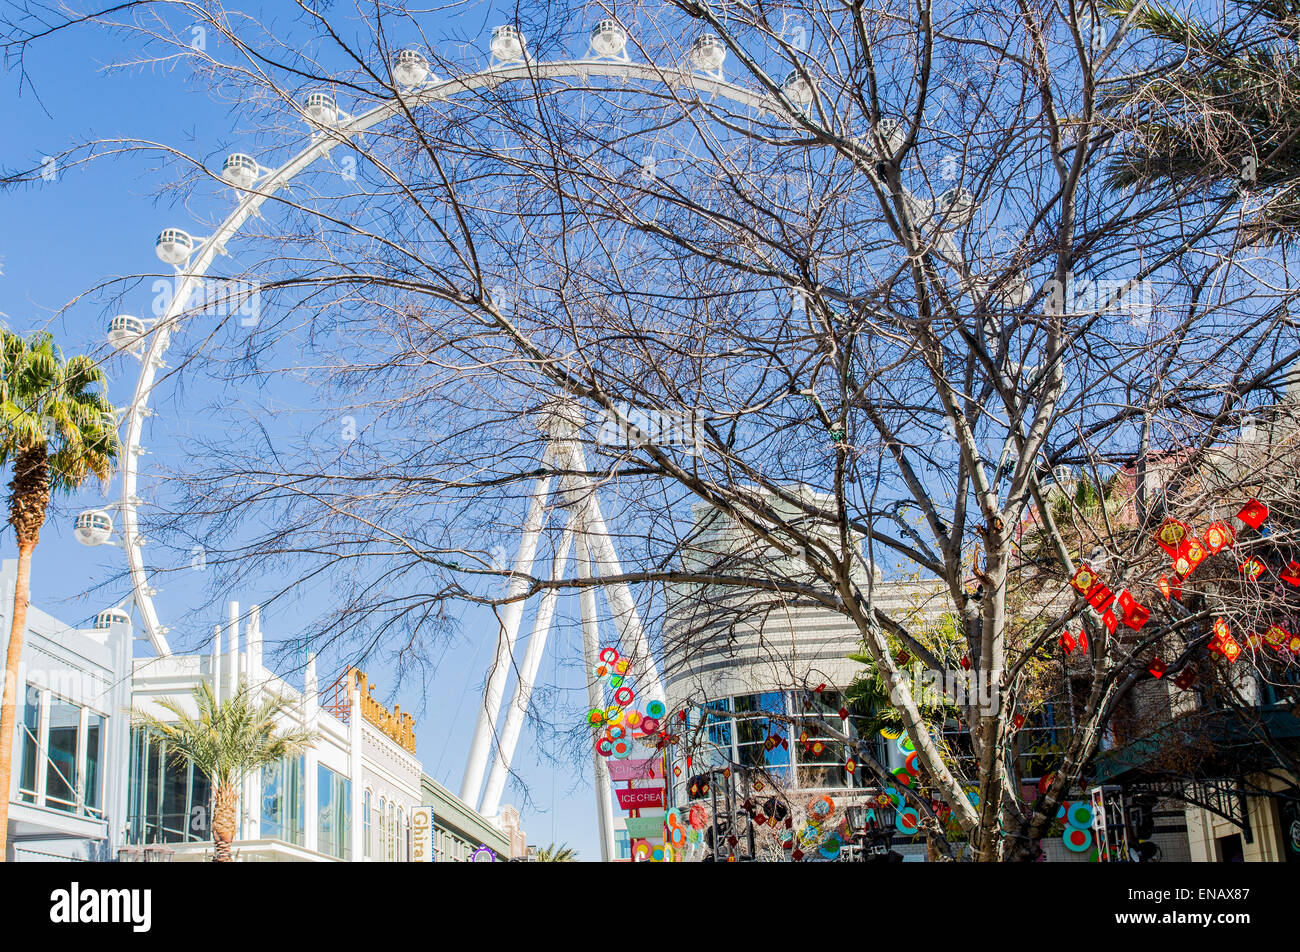 Las Vegas, The Linq Promenade The Ferris wheel In the background Stock Photo